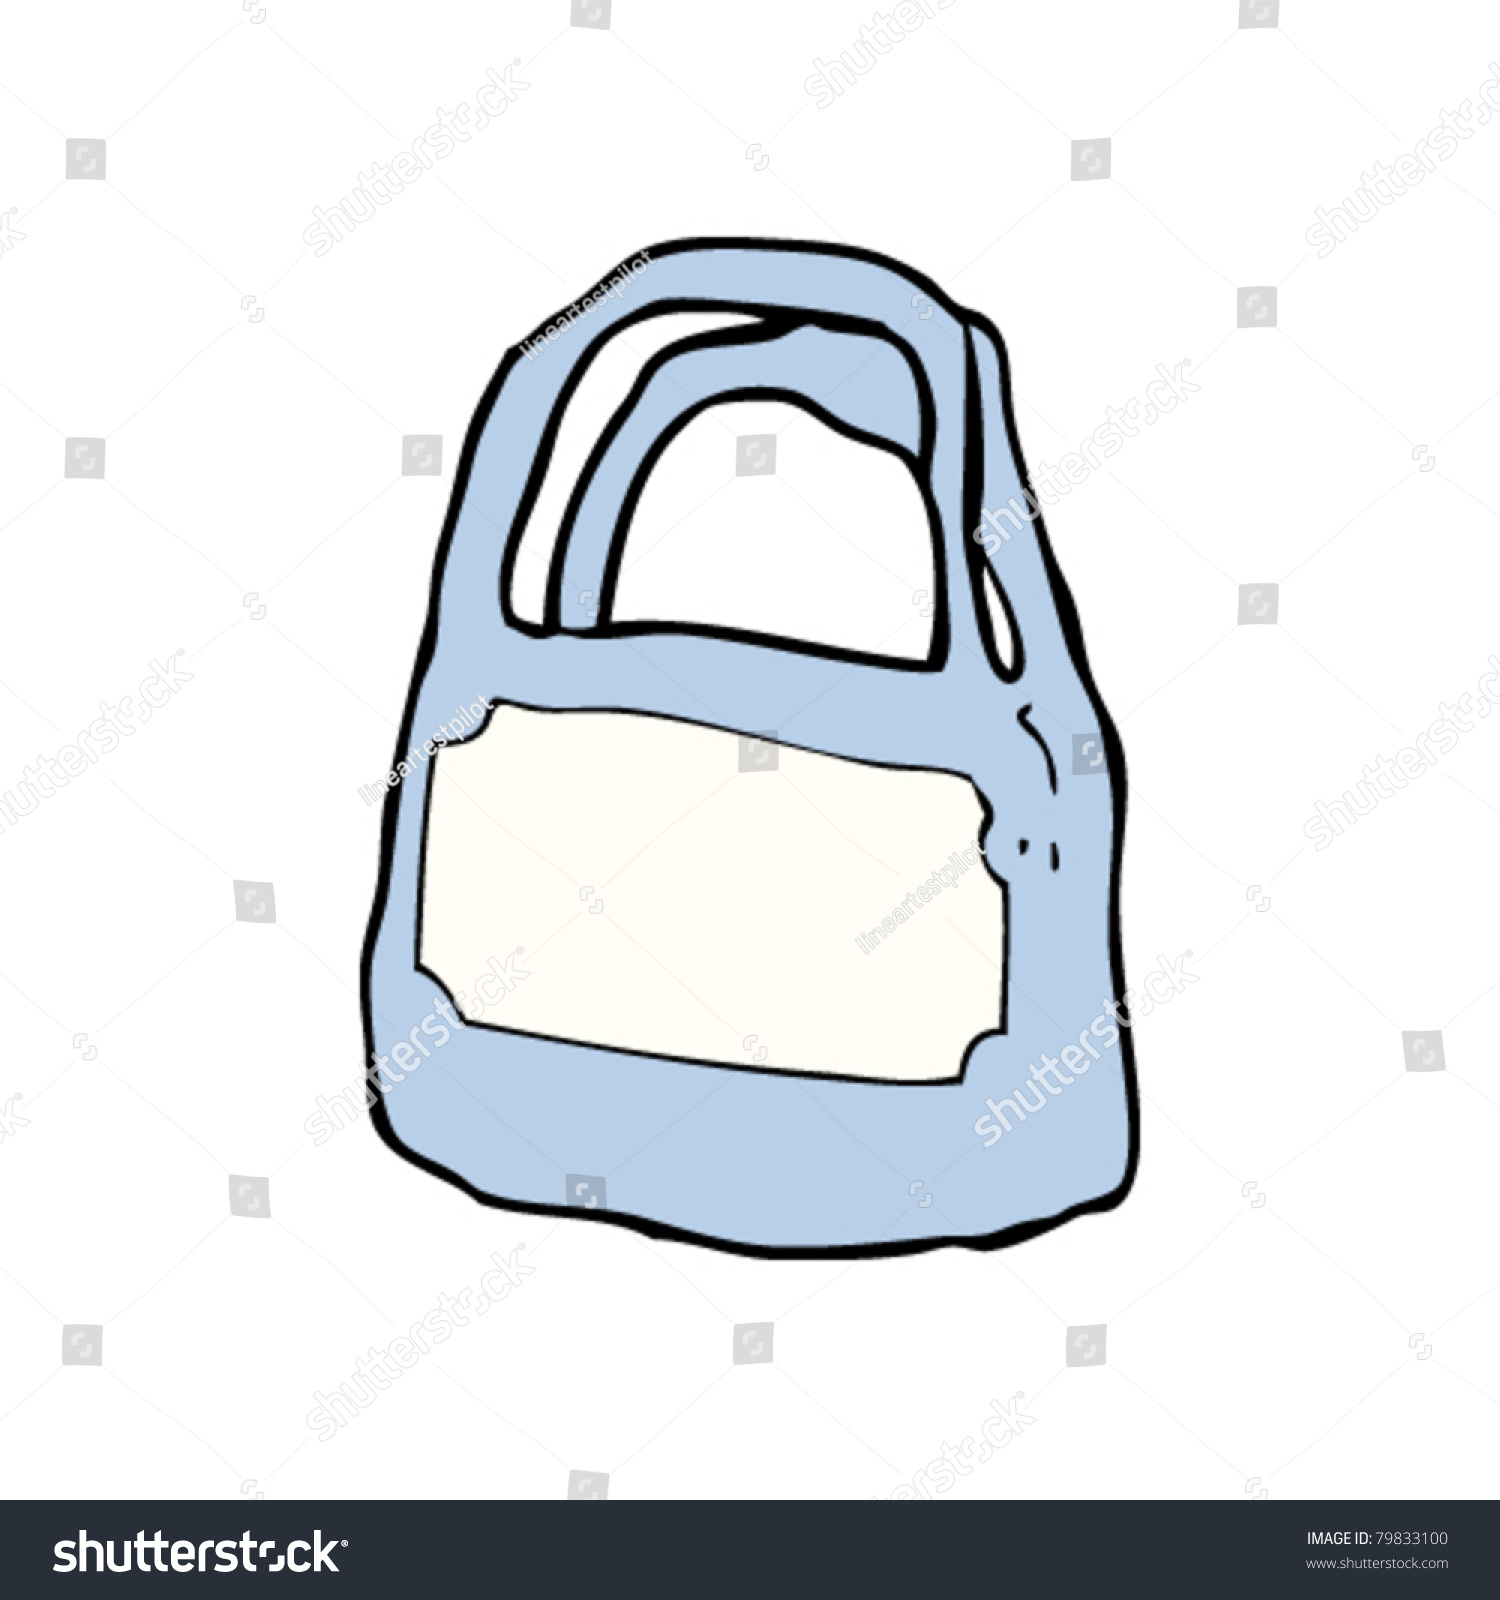 Shopping Bag Cartoon Stock Vector 79833100 - Shutterstock